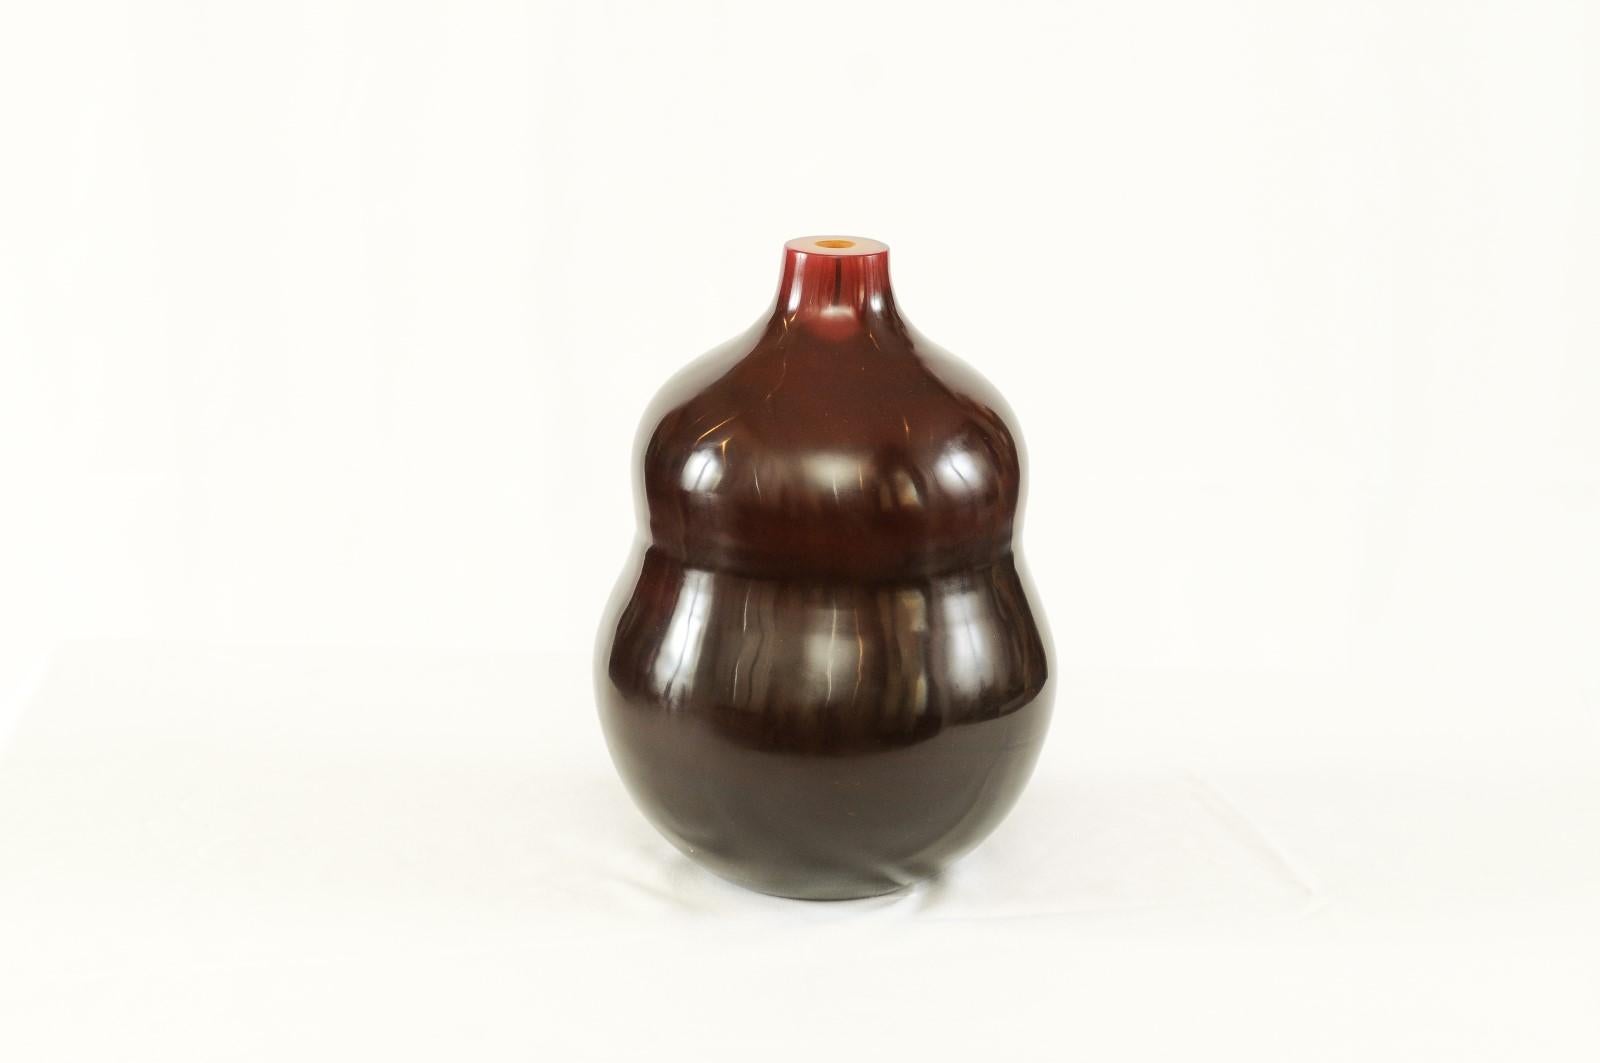 Peking Glass Vase - Robert Kuo for McGuire 1